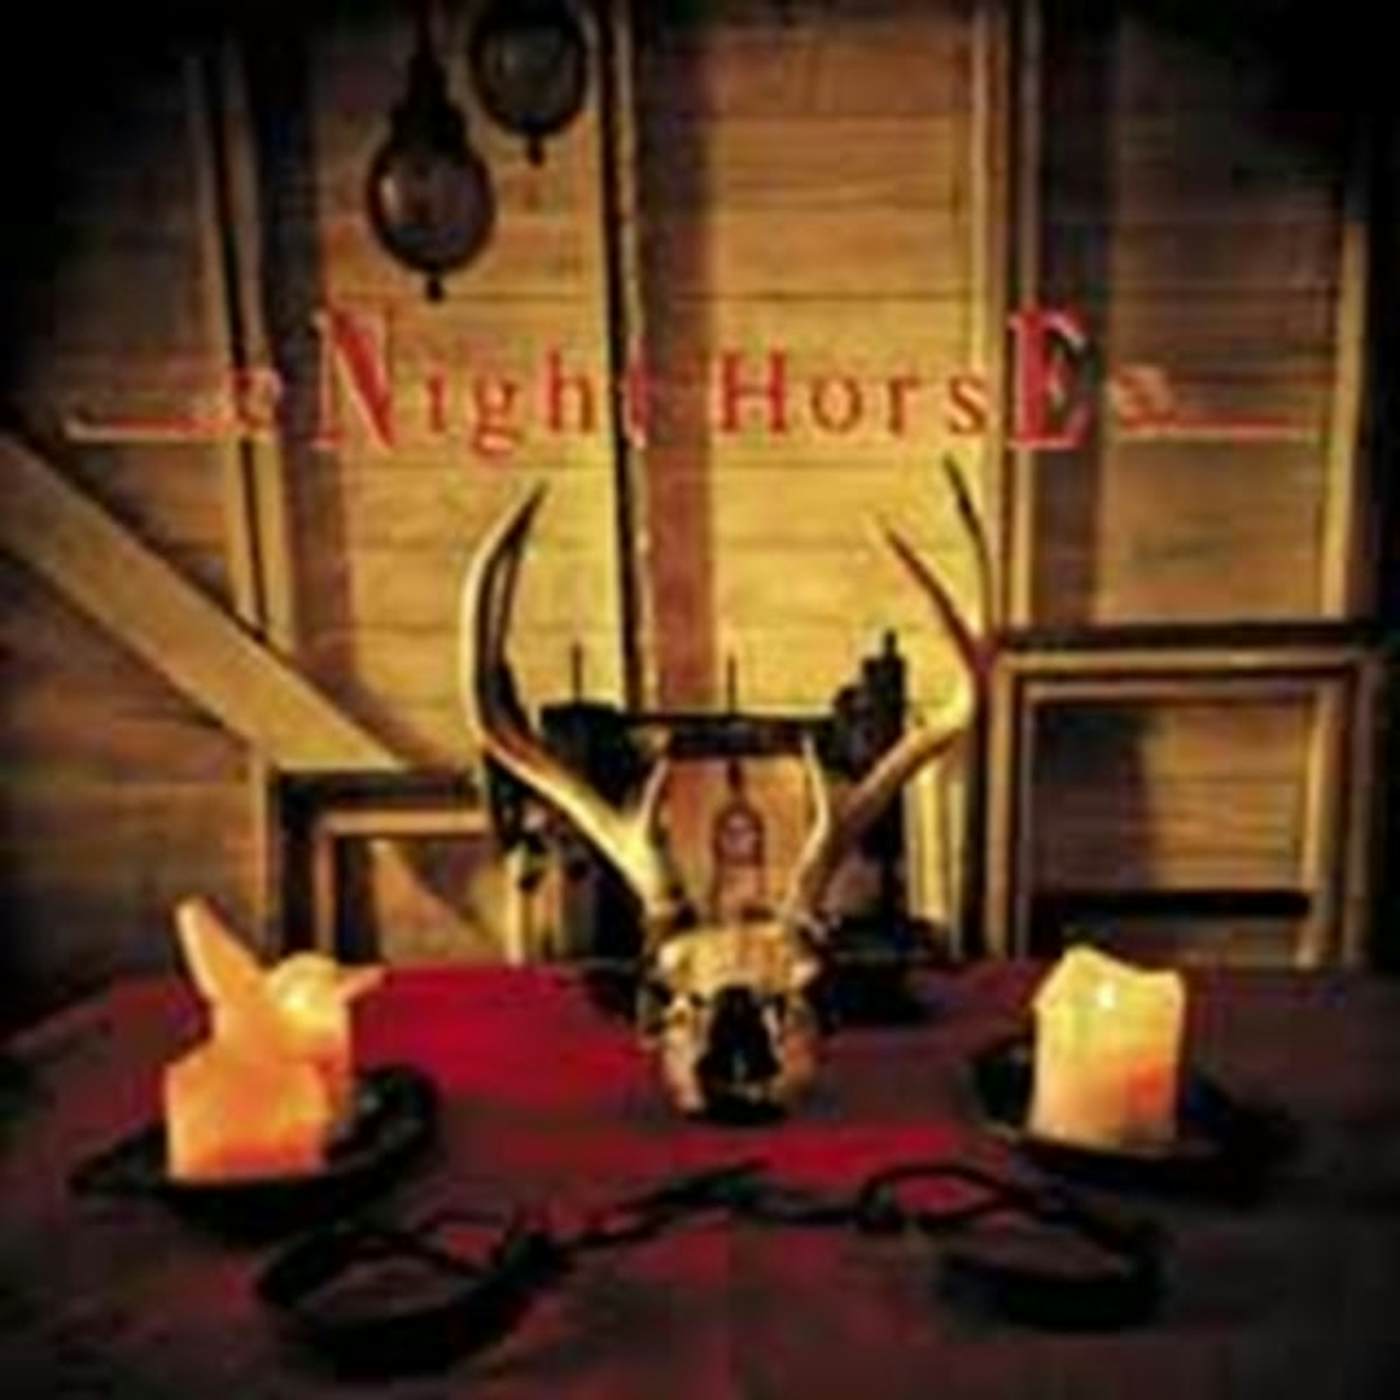 Night Horse CD - The Dark Won't Hide You